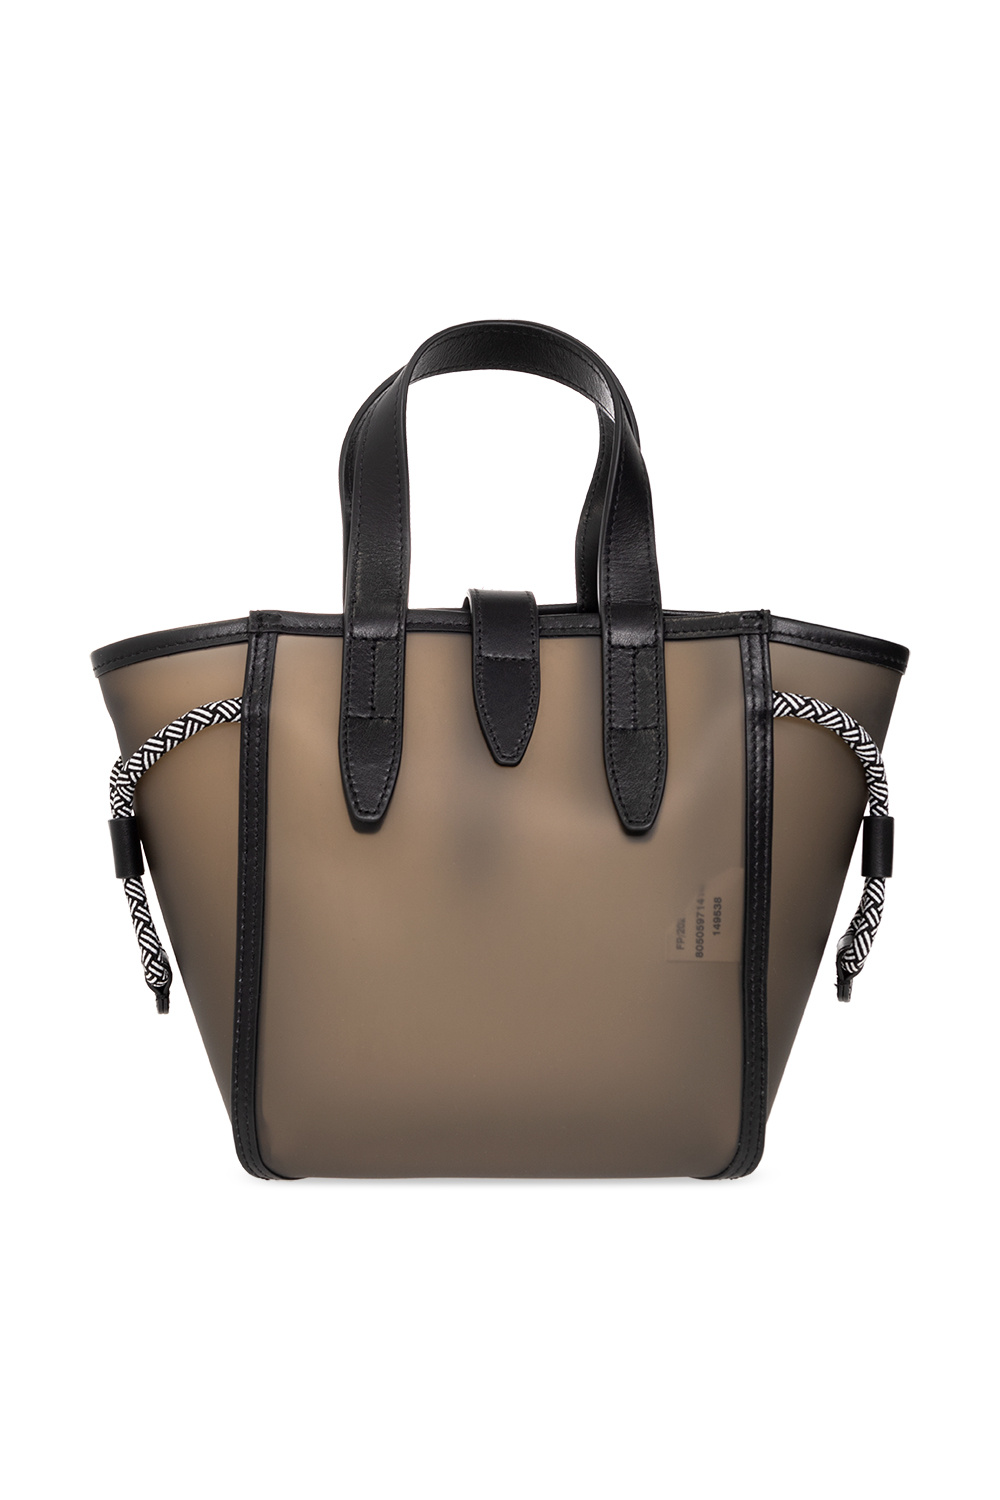 Furla ‘Net Mini’ shopper bag